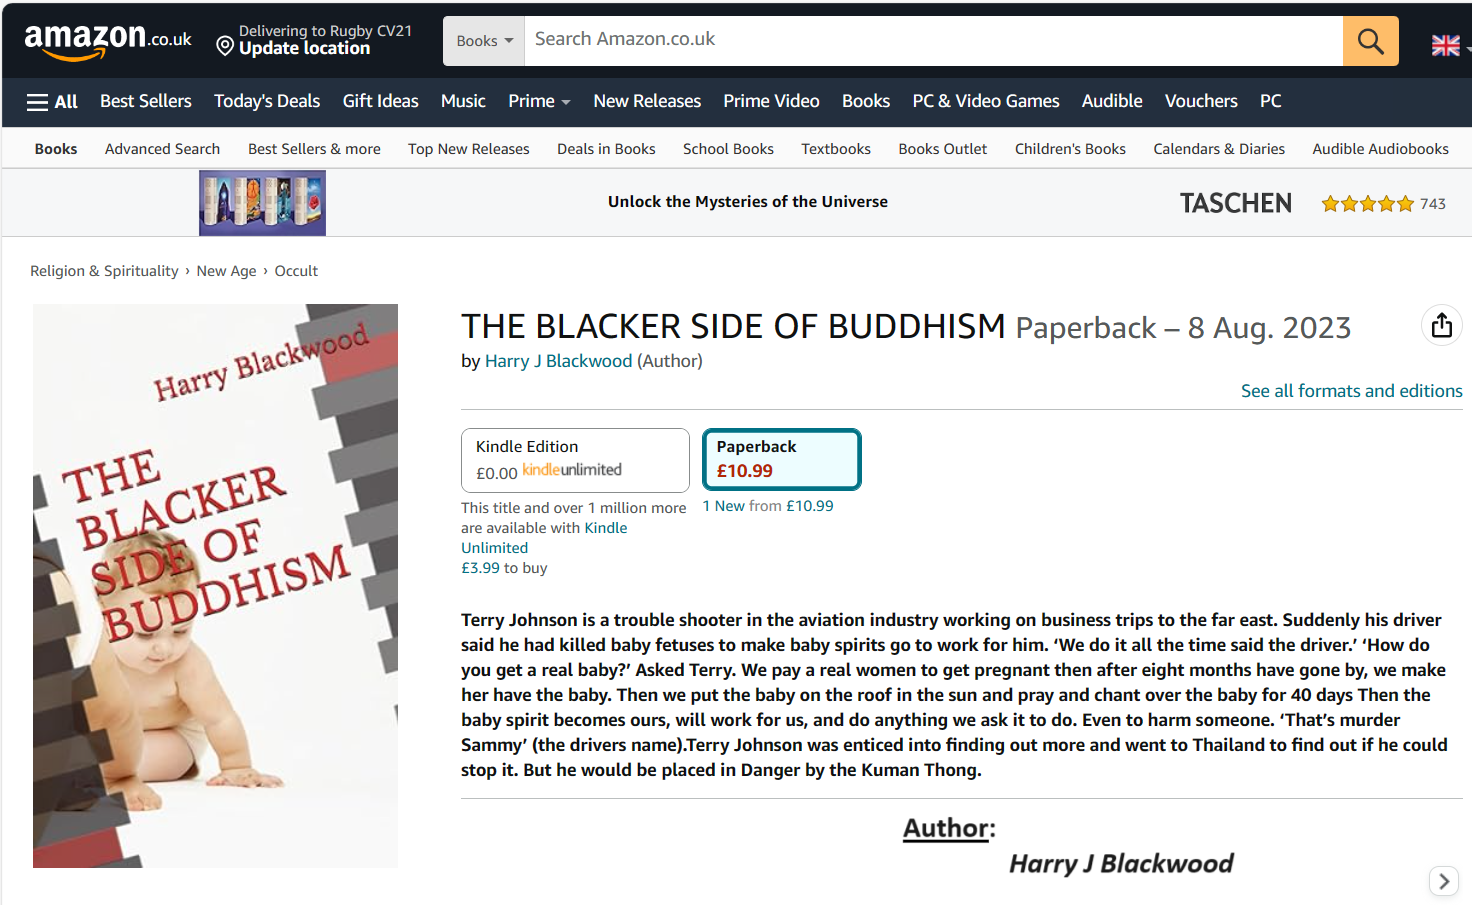 ✨Happy LAUNCH DAY Harry j blackwood, THE BLACKER SIDE OF BUDDHISM on Amazon✨